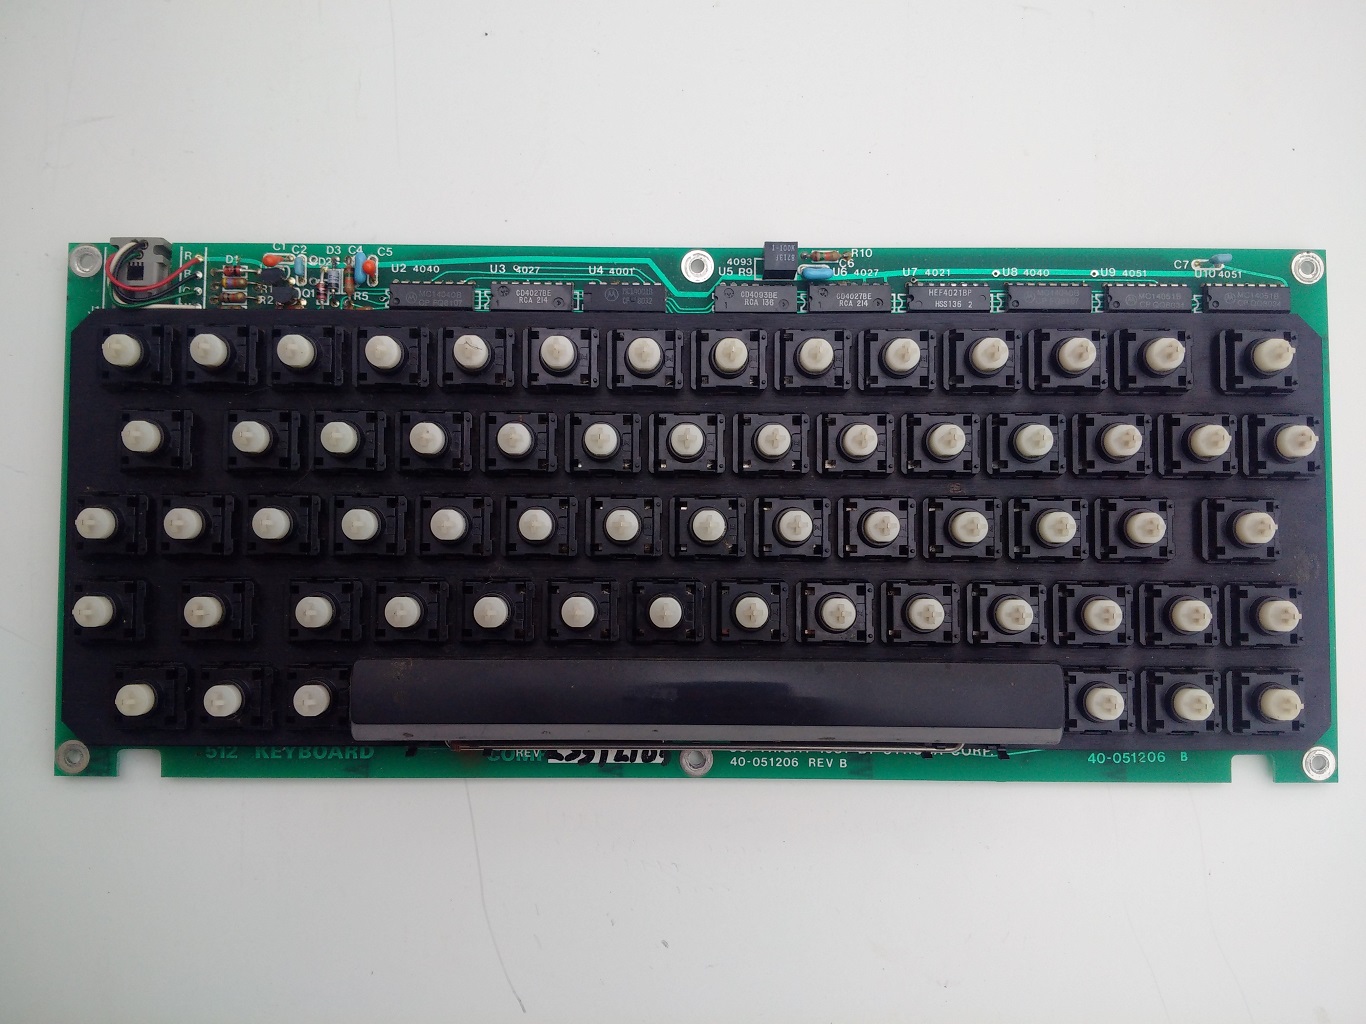 Otrona - front of keyboard assembly